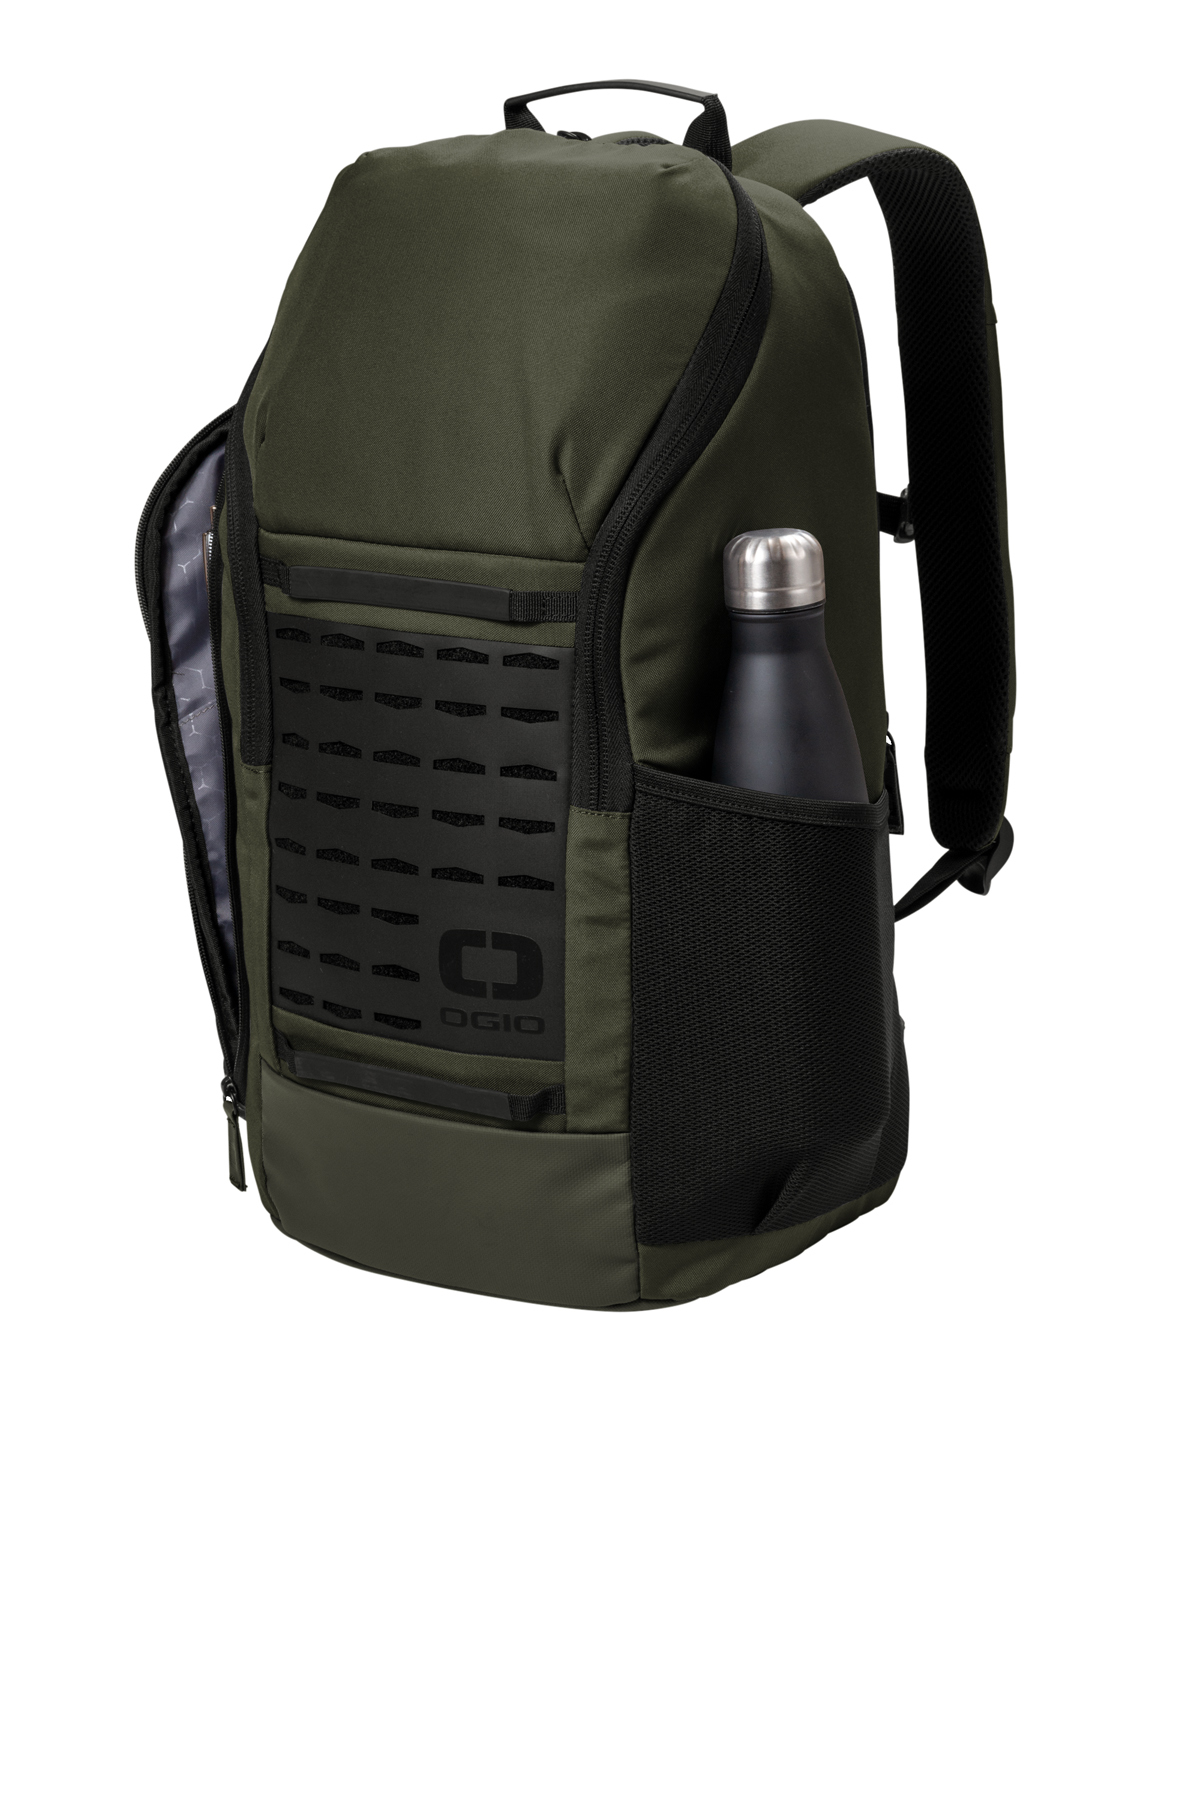 Buy New US GI Duffle Bag - Genuine US Military Surplus Duffel at Army  Surplus World